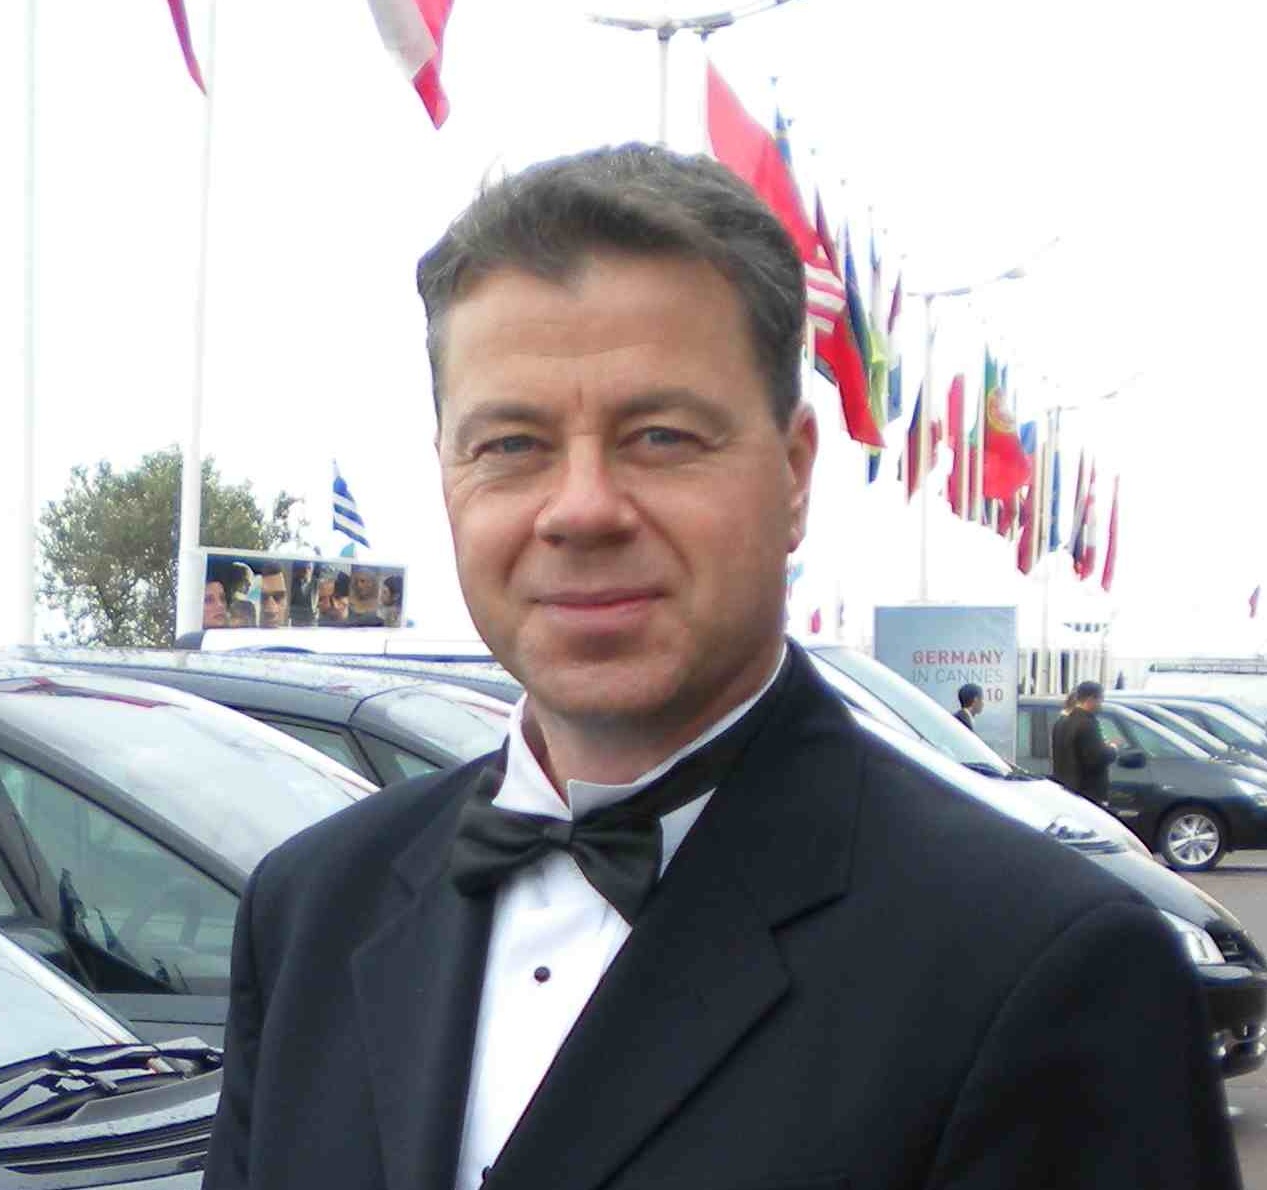 Phil Gorn, Cannes Film Festival